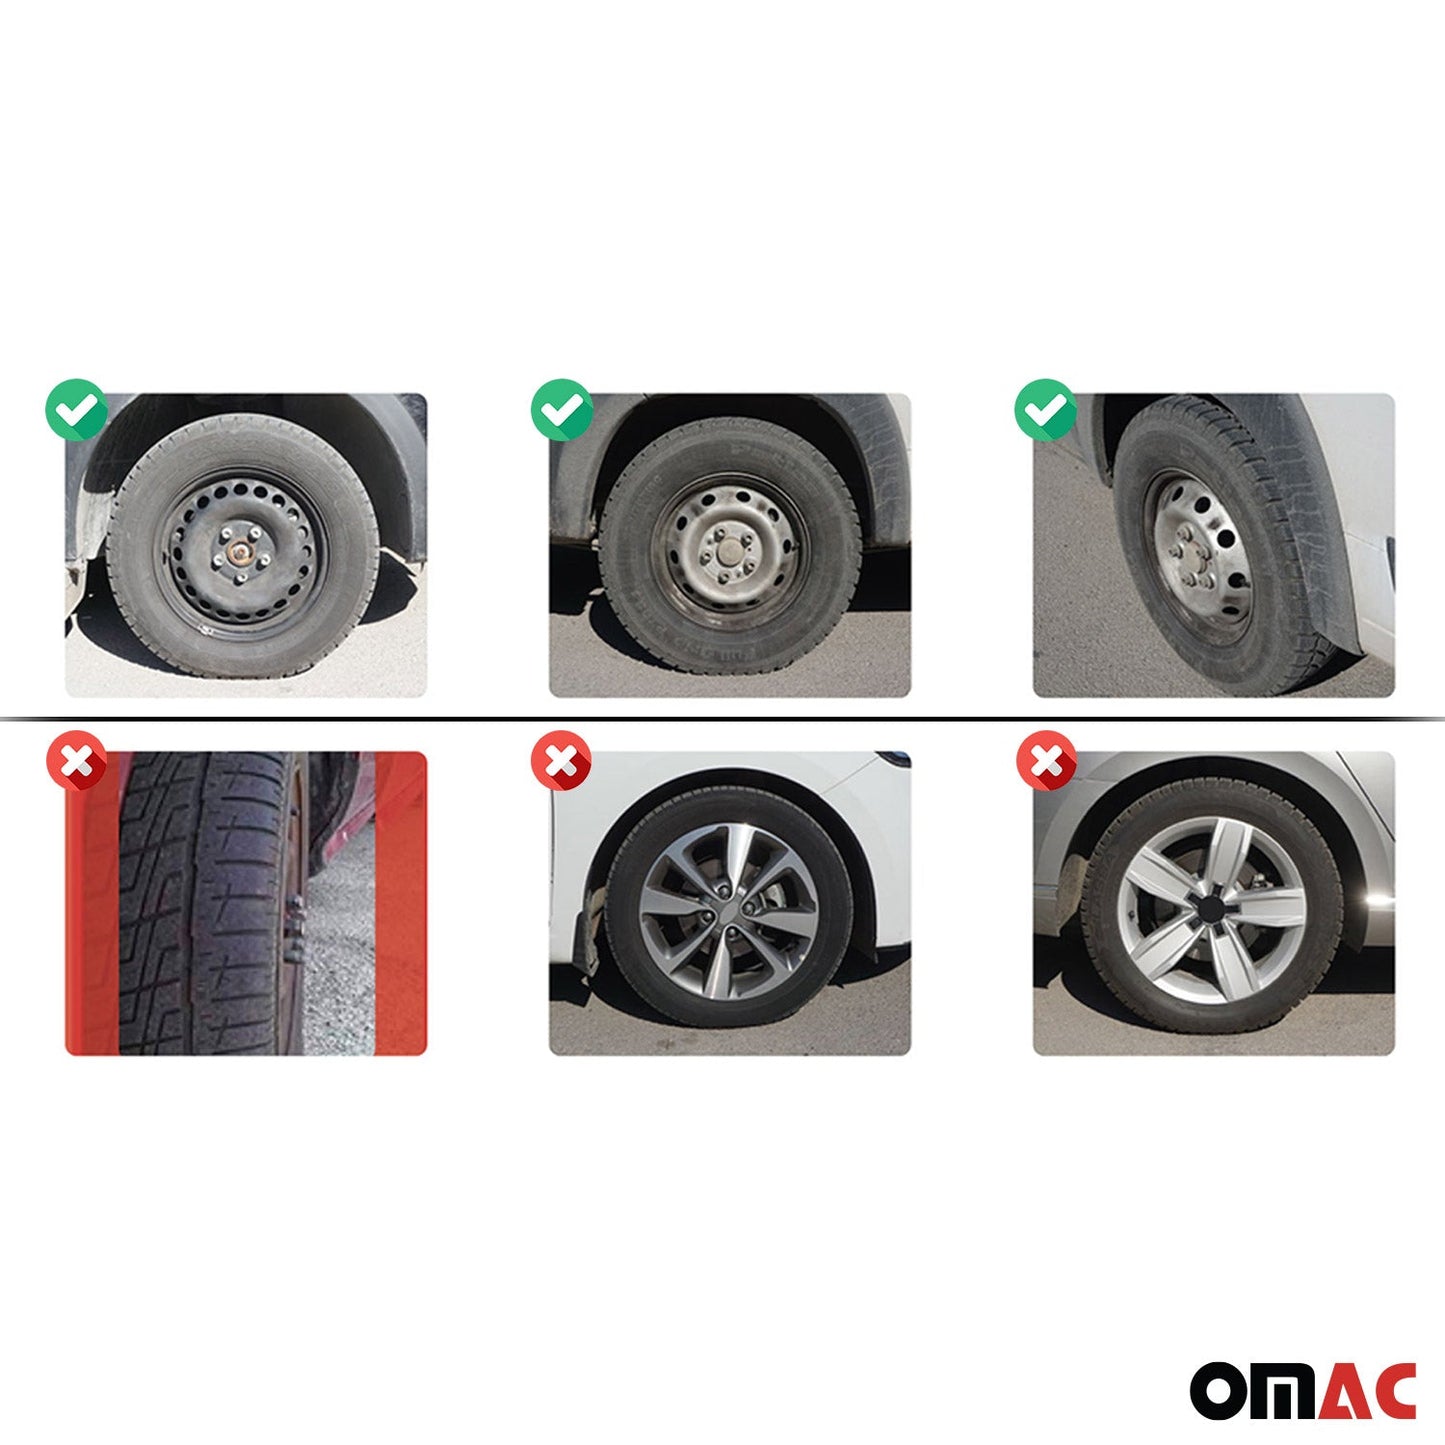 OMAC 15" Hubcaps Wheel Rim Cover Black with White Insert 4 pcs Set VRT99FR243B15W